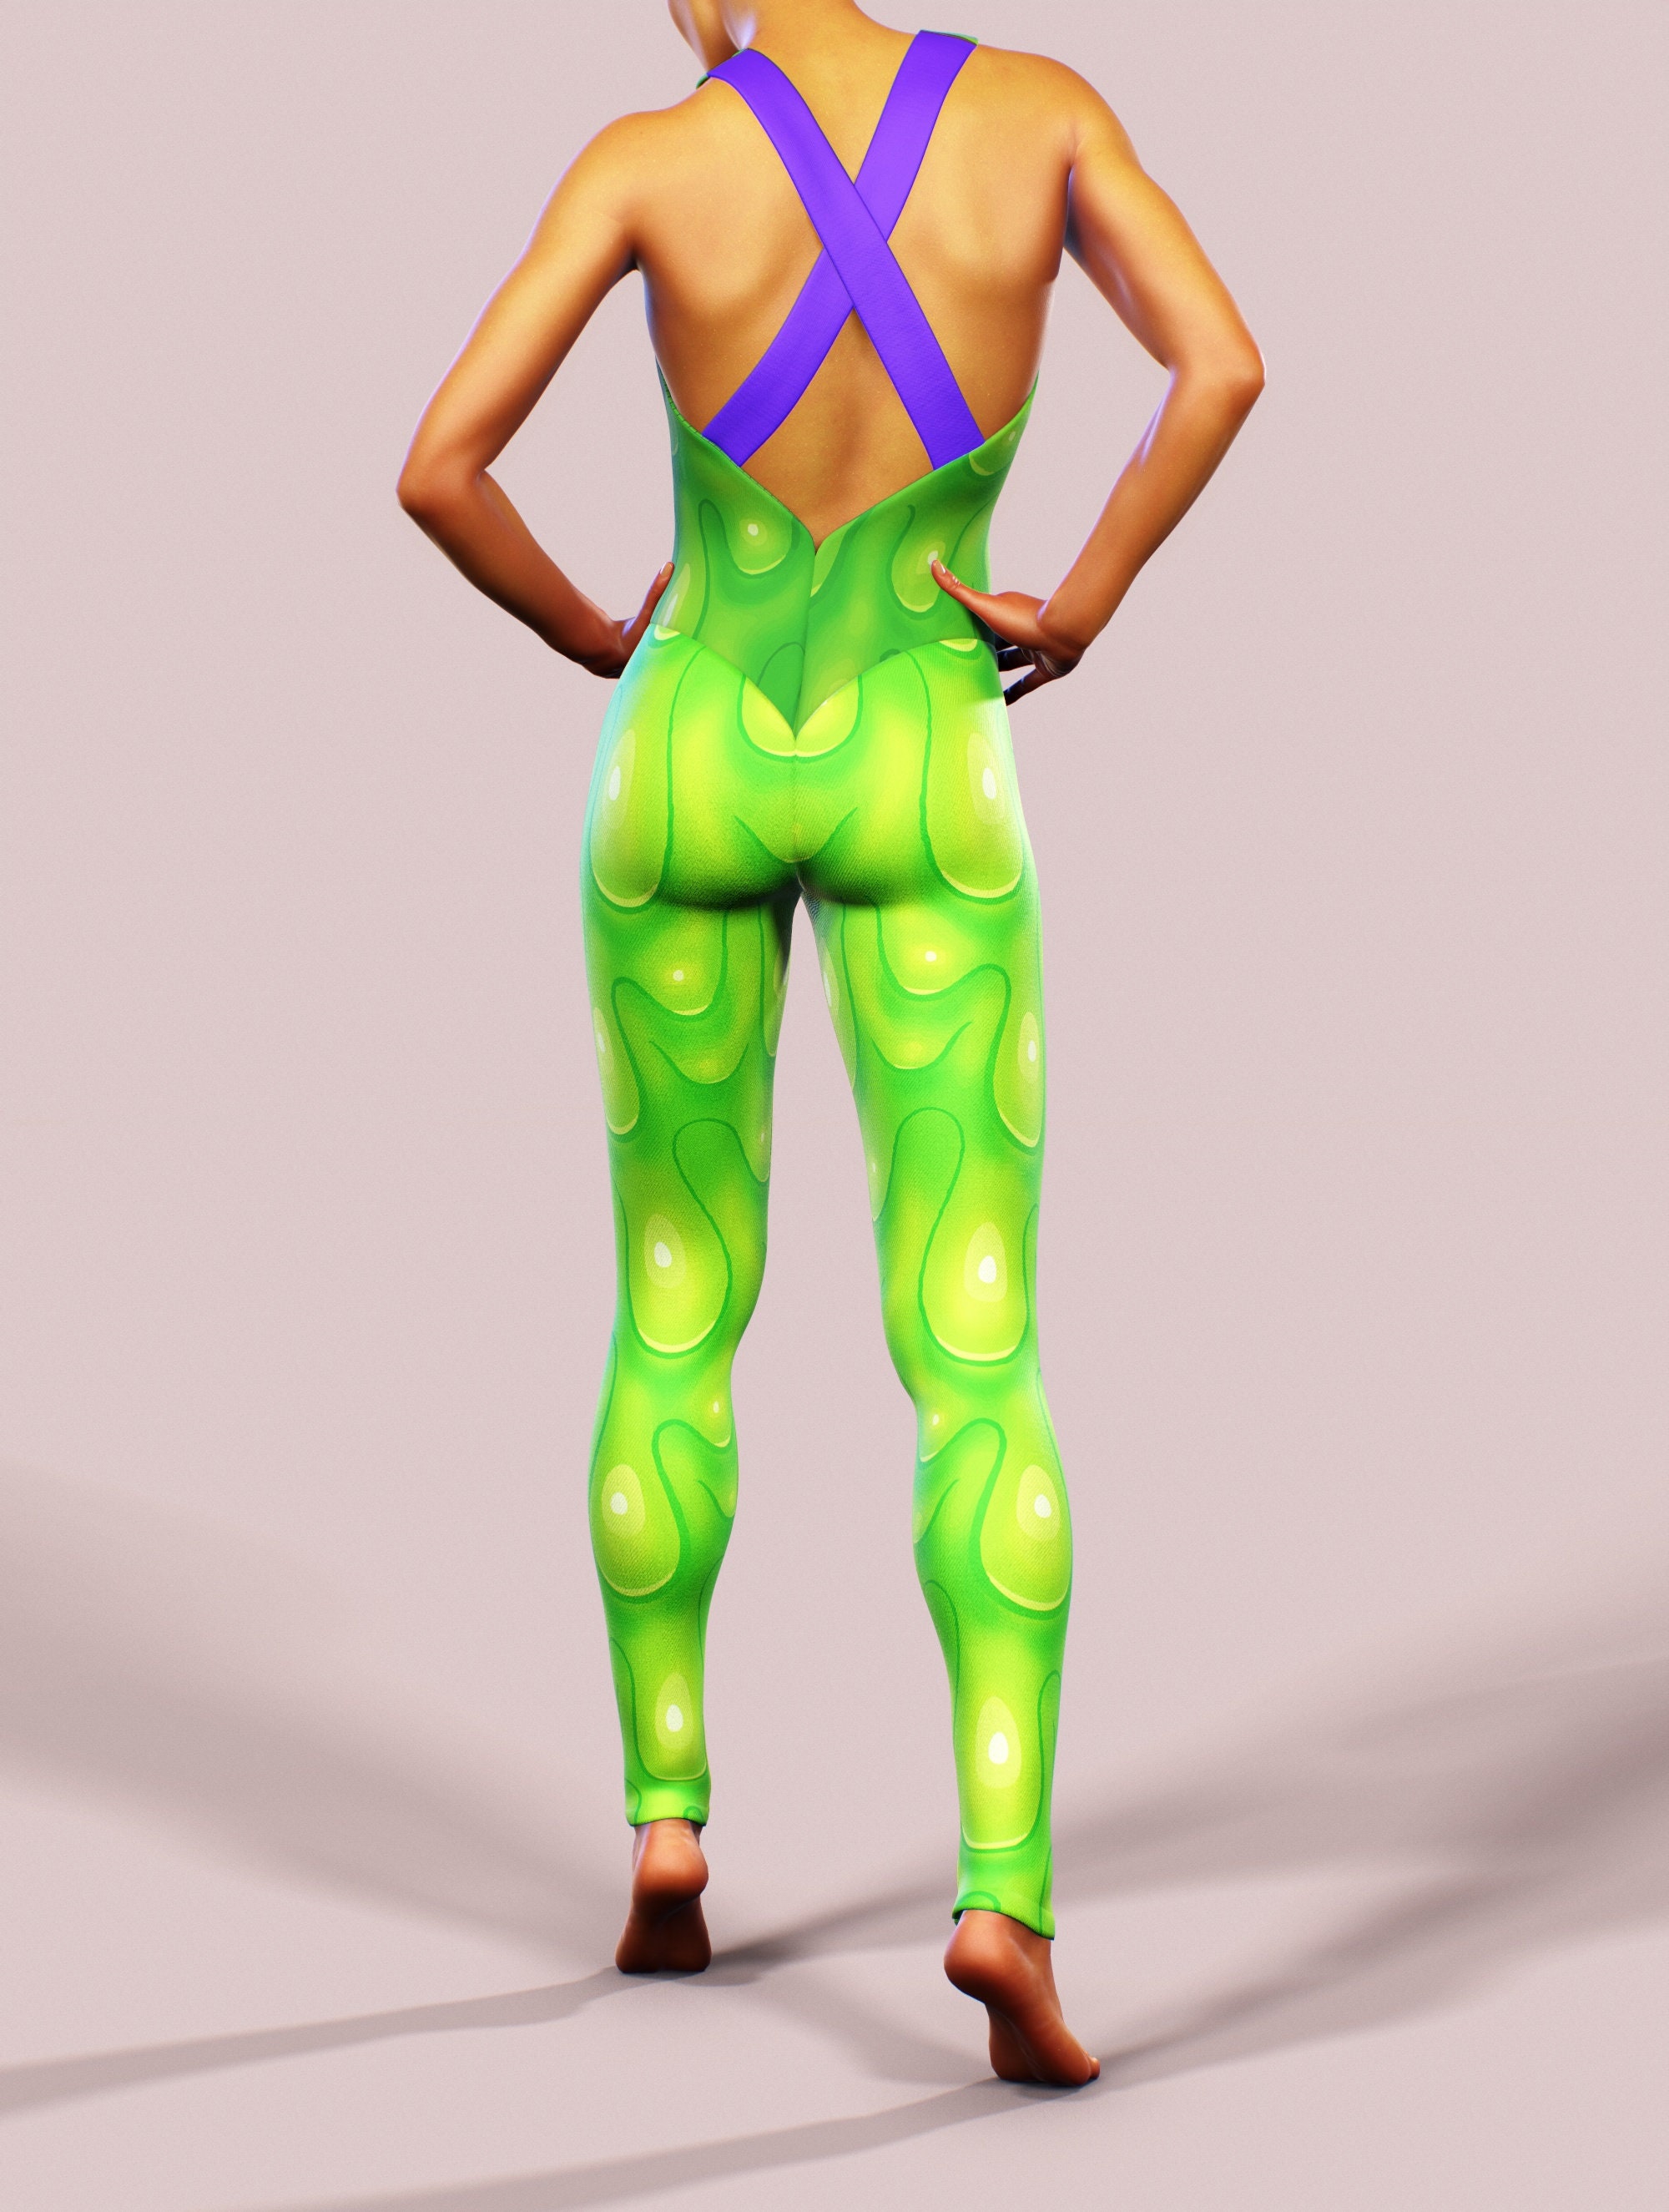 Colorful Sports Wear Woman, Crossfit Bodysuit, Dance Costume Woman